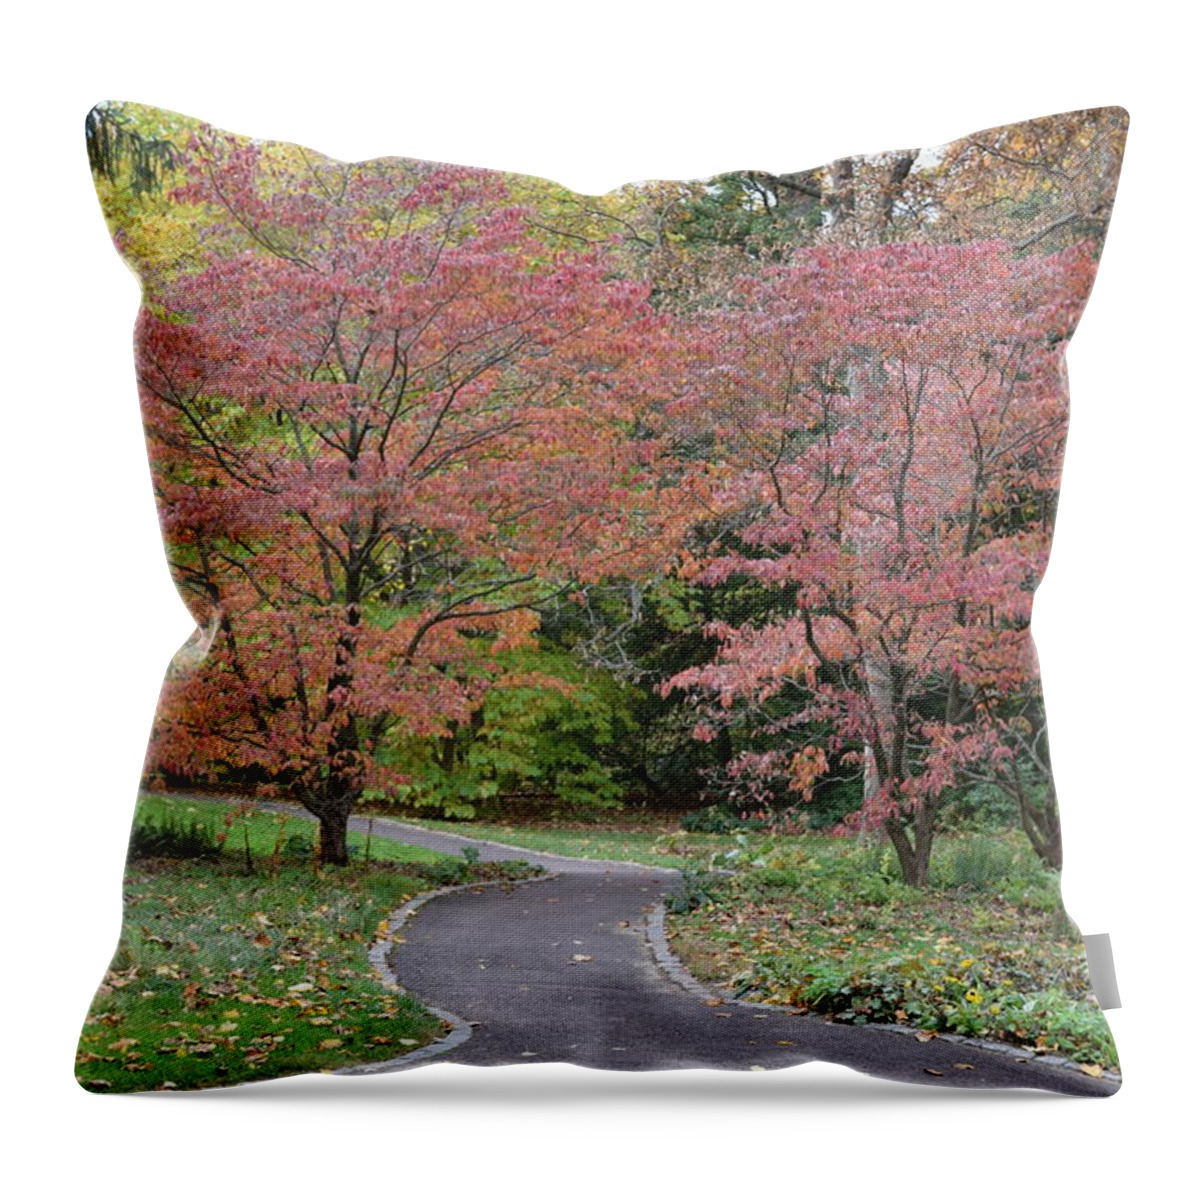 Tree Throw Pillow featuring the photograph Dreamwalk by Deborah Crew-Johnson